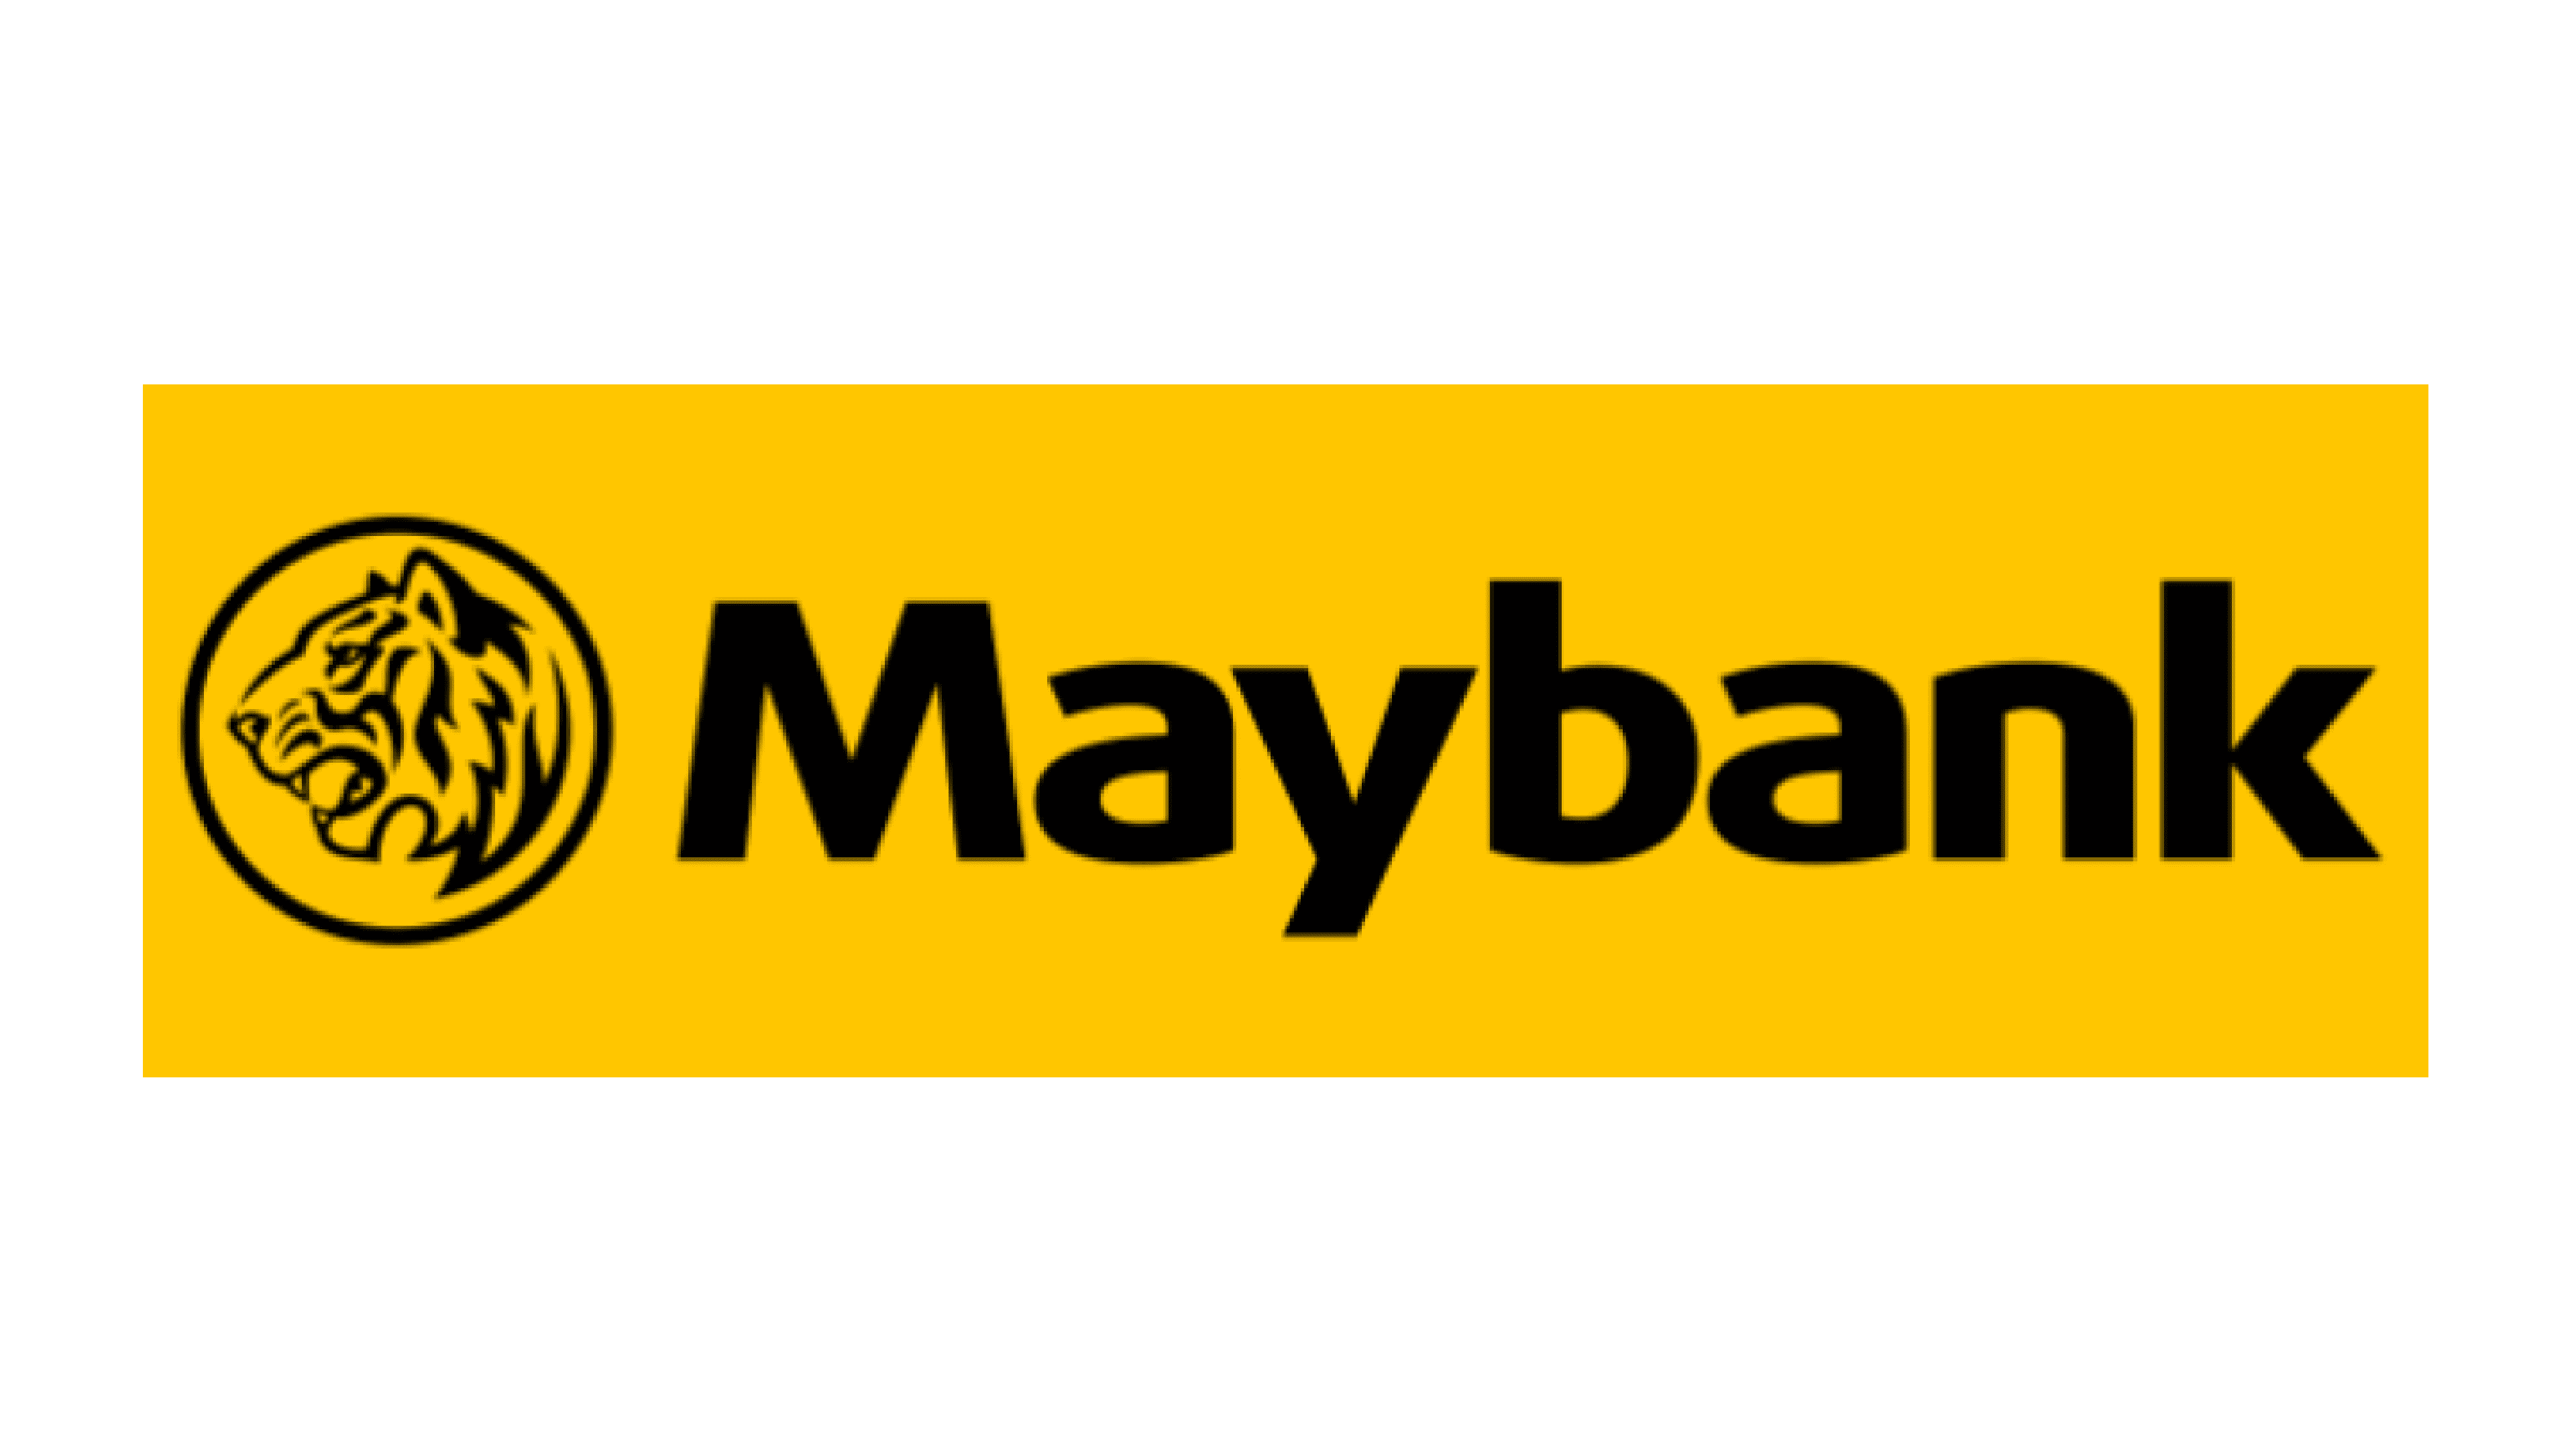 Maybank-logo